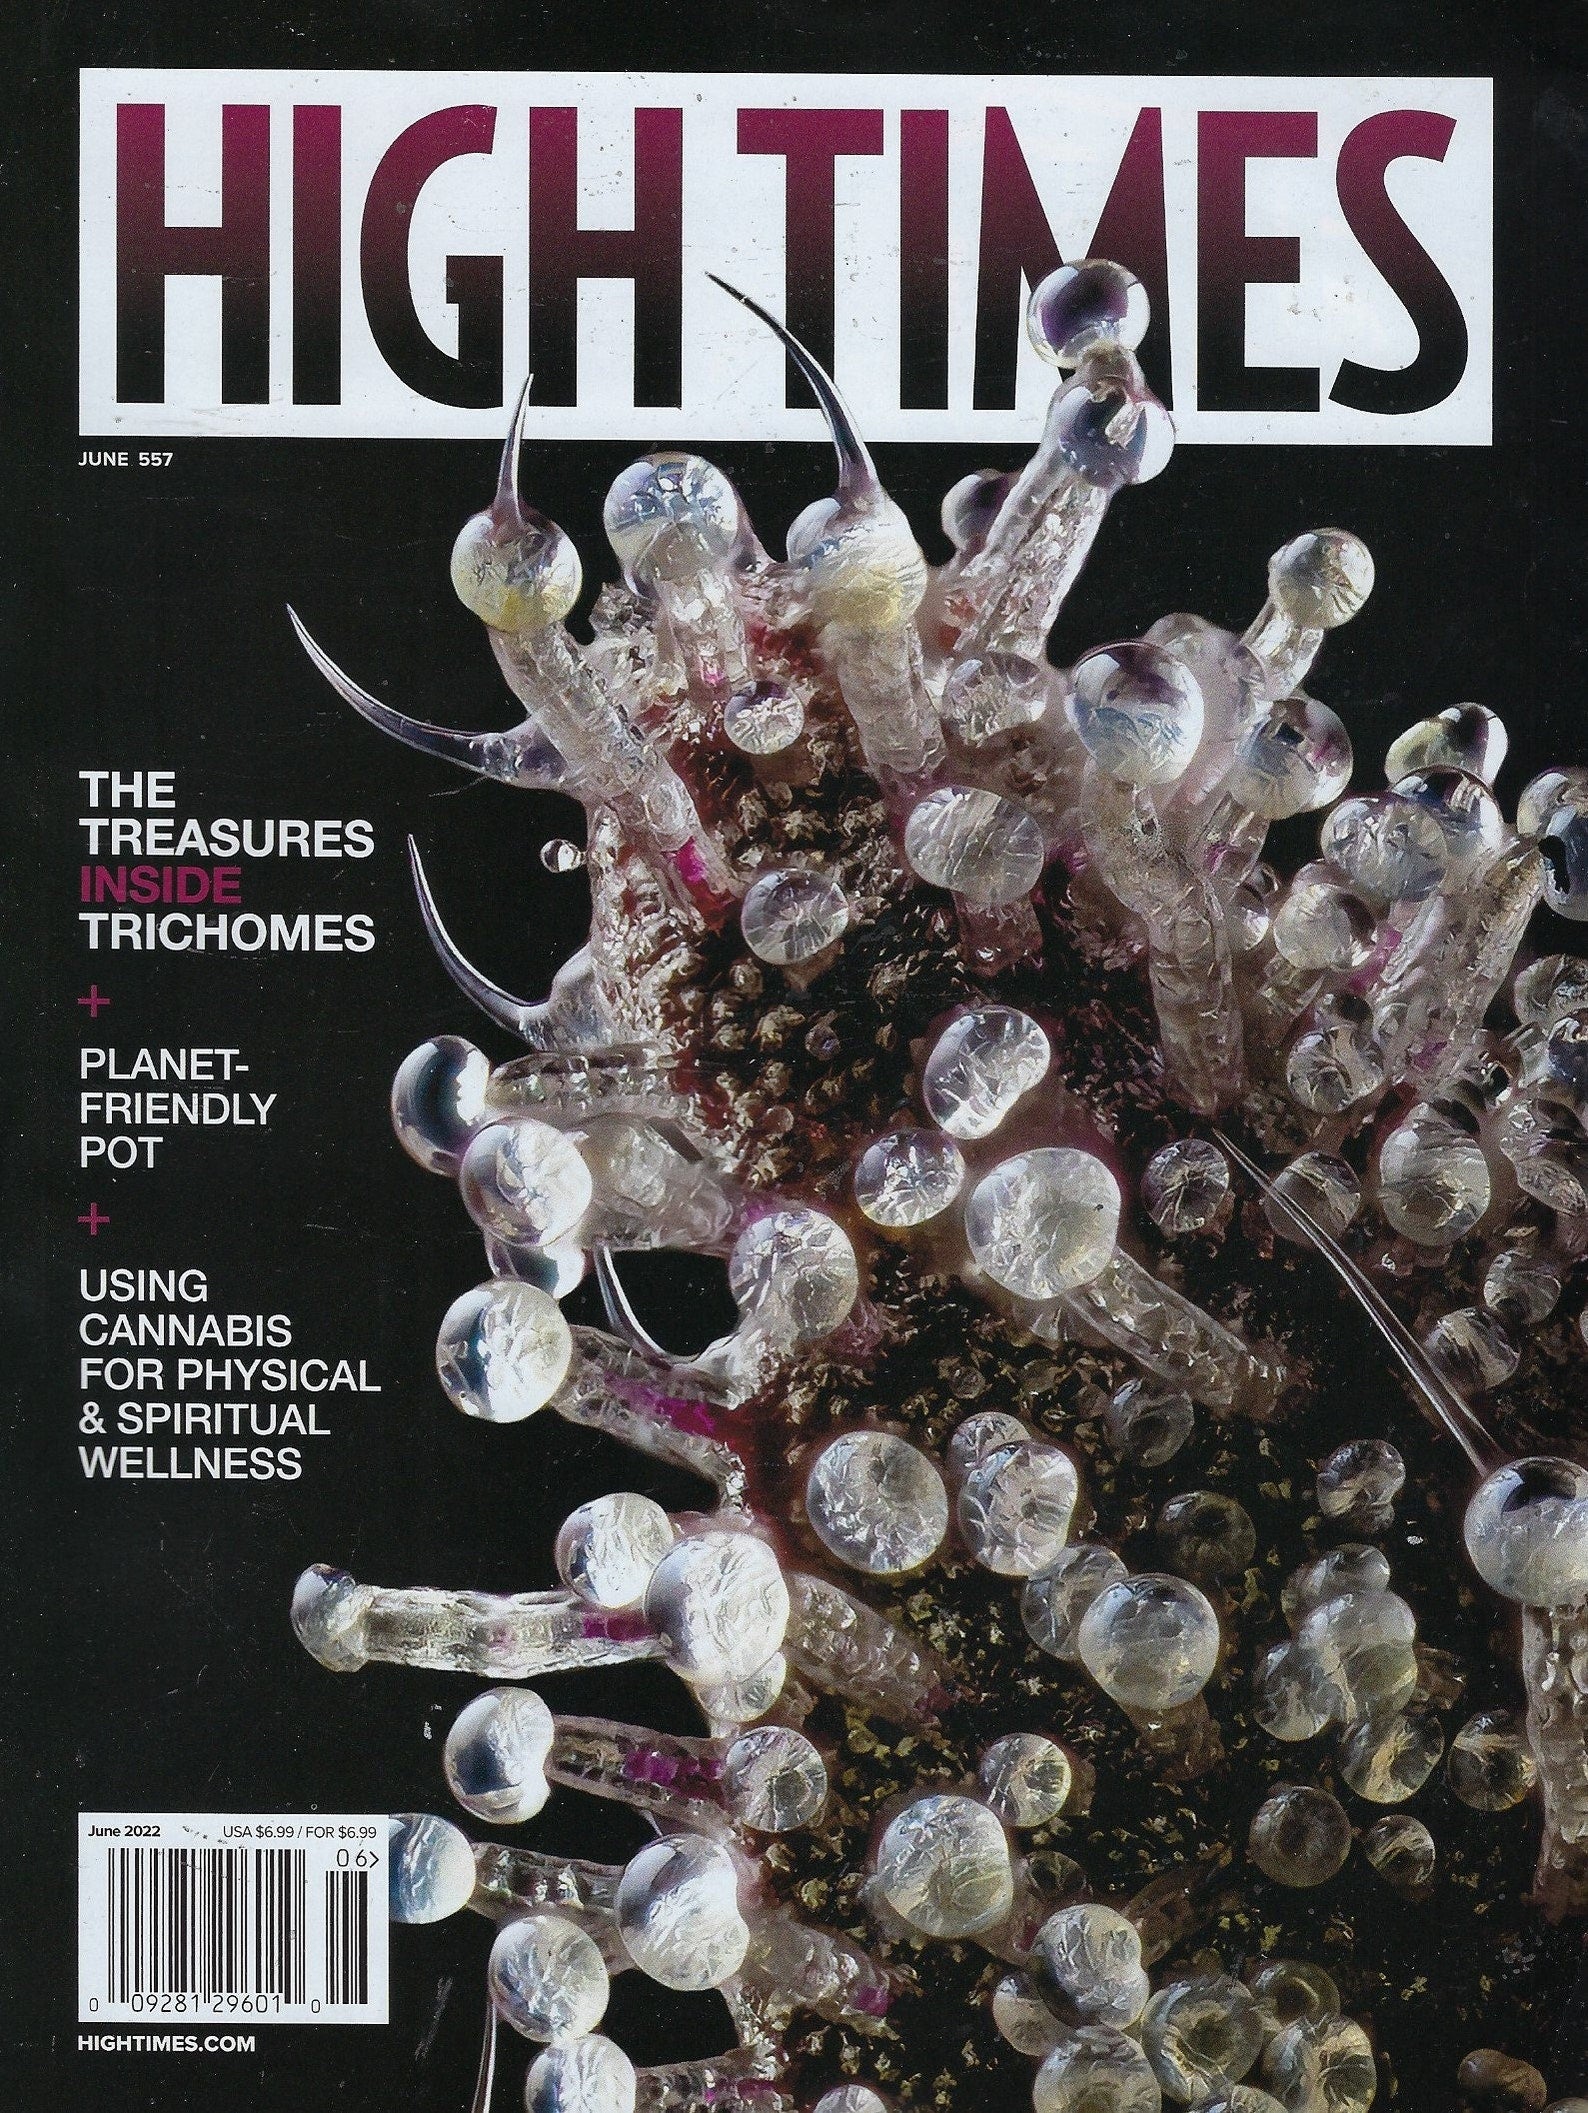 High Times Magazine - May